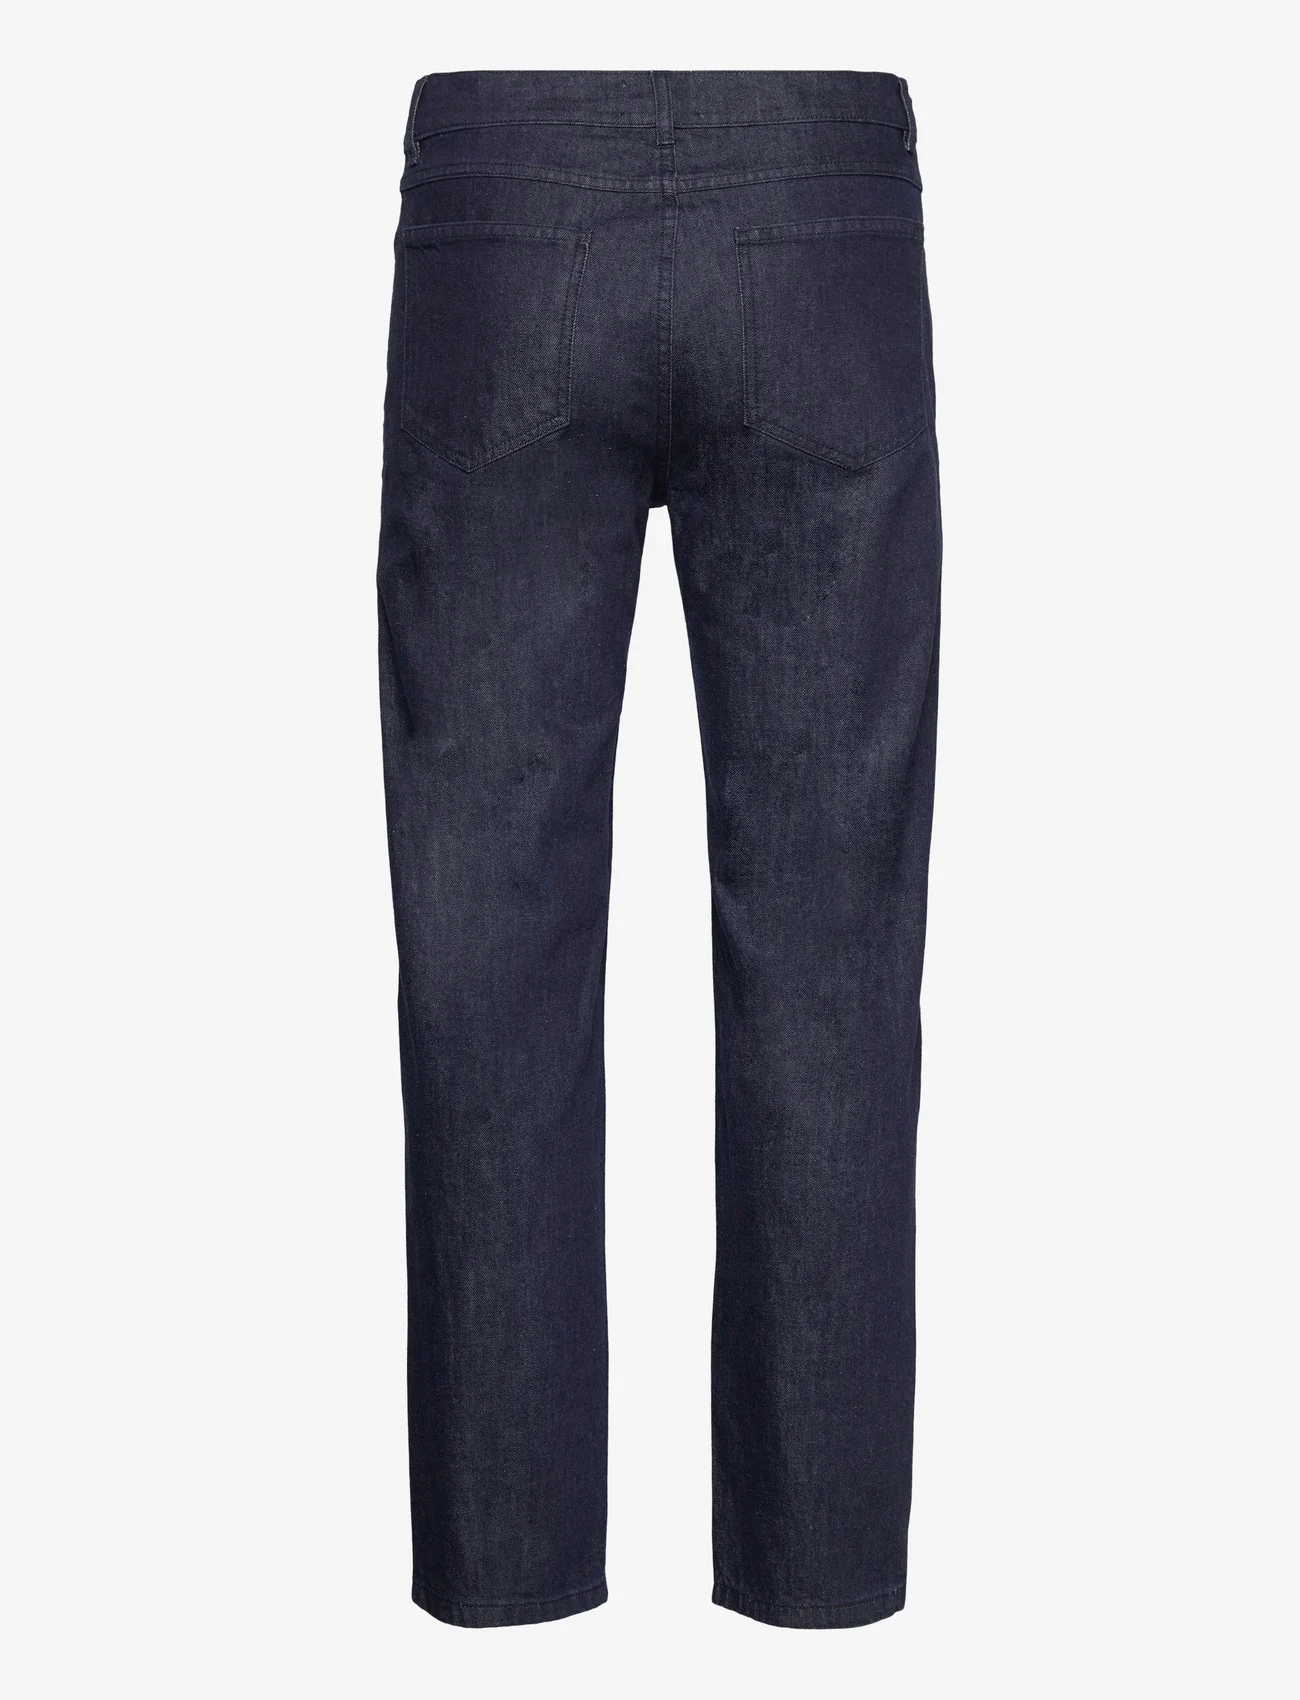 HOLZWEILER - Genesis Denim Trouser - regular jeans - dk. blue - 1